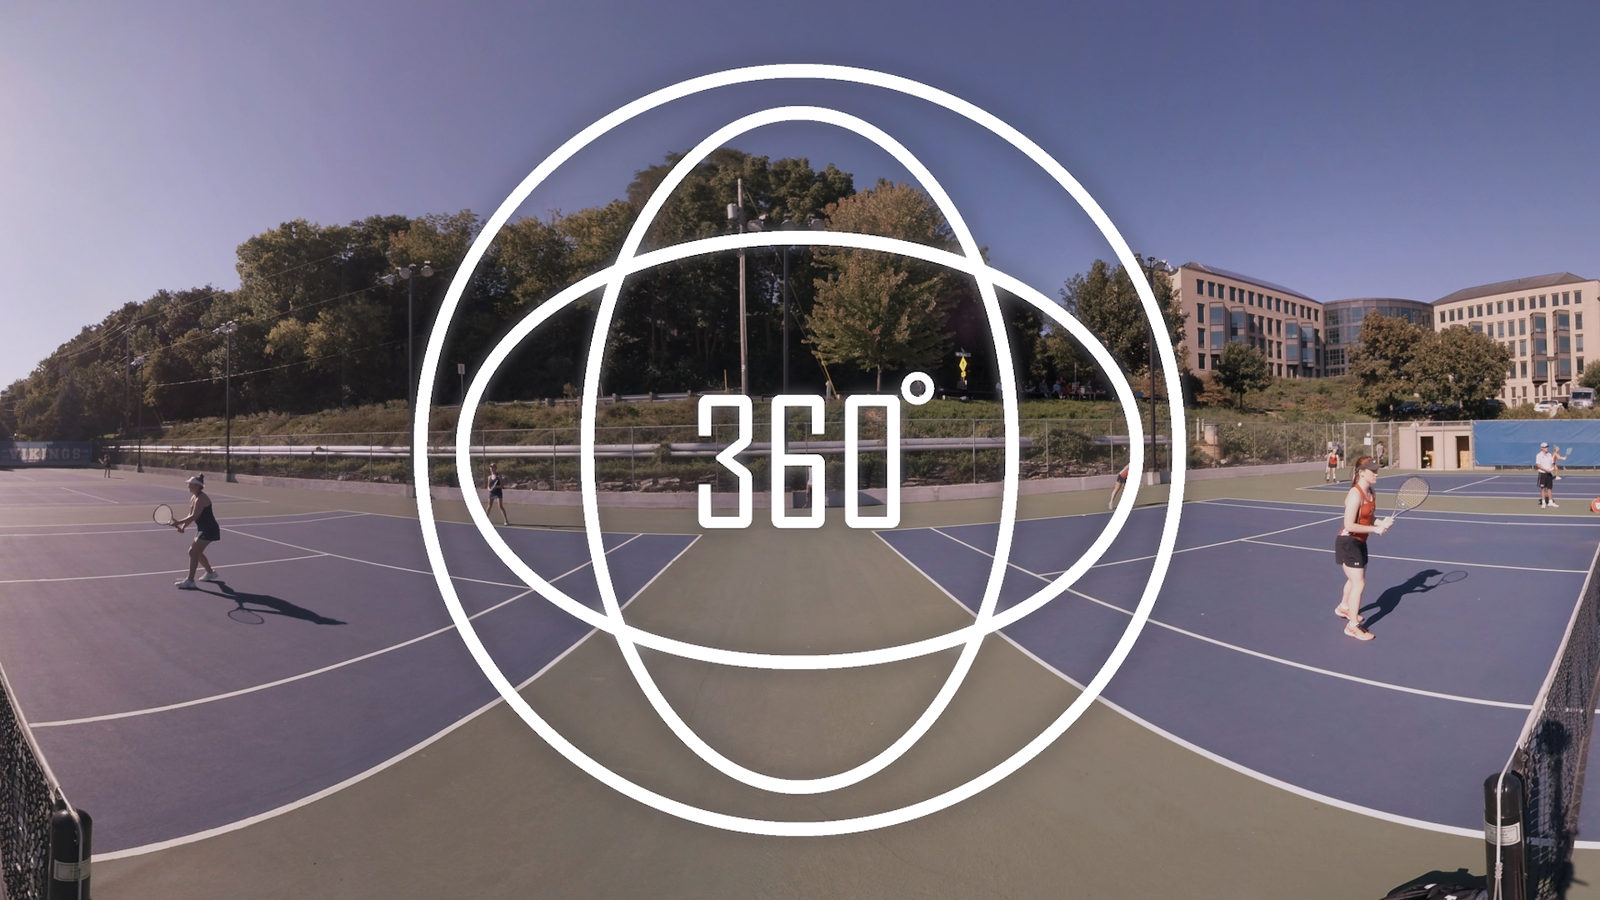 Tennis 360 video